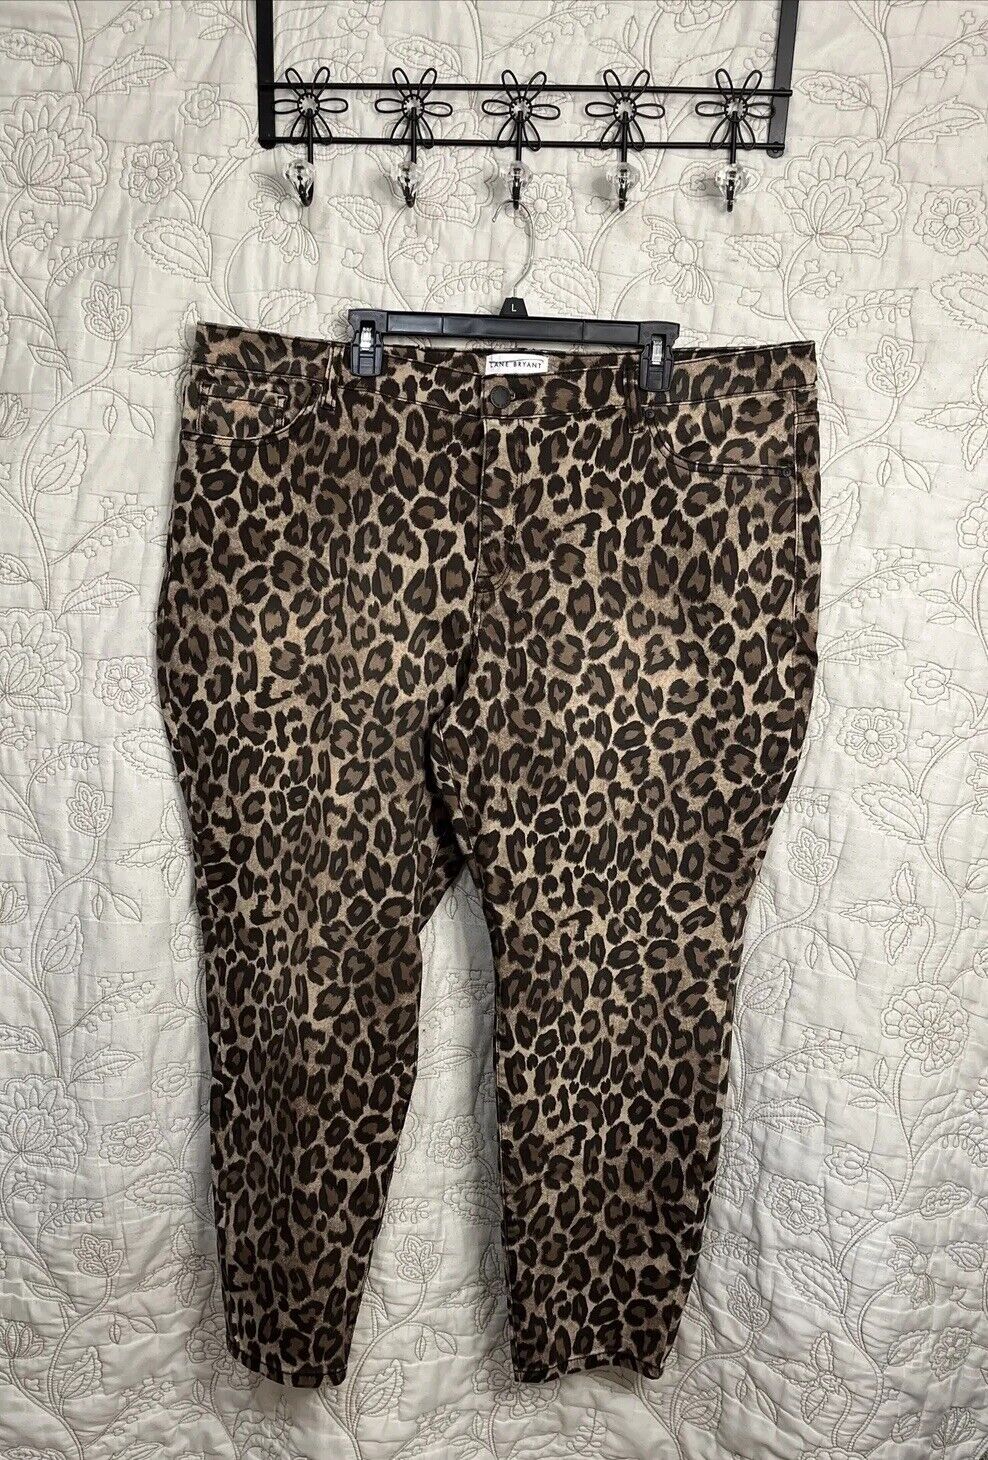 Lane Bryant Women\'s Size 24 Crop Jeans Leopard Print 5-Pocket Design NEW